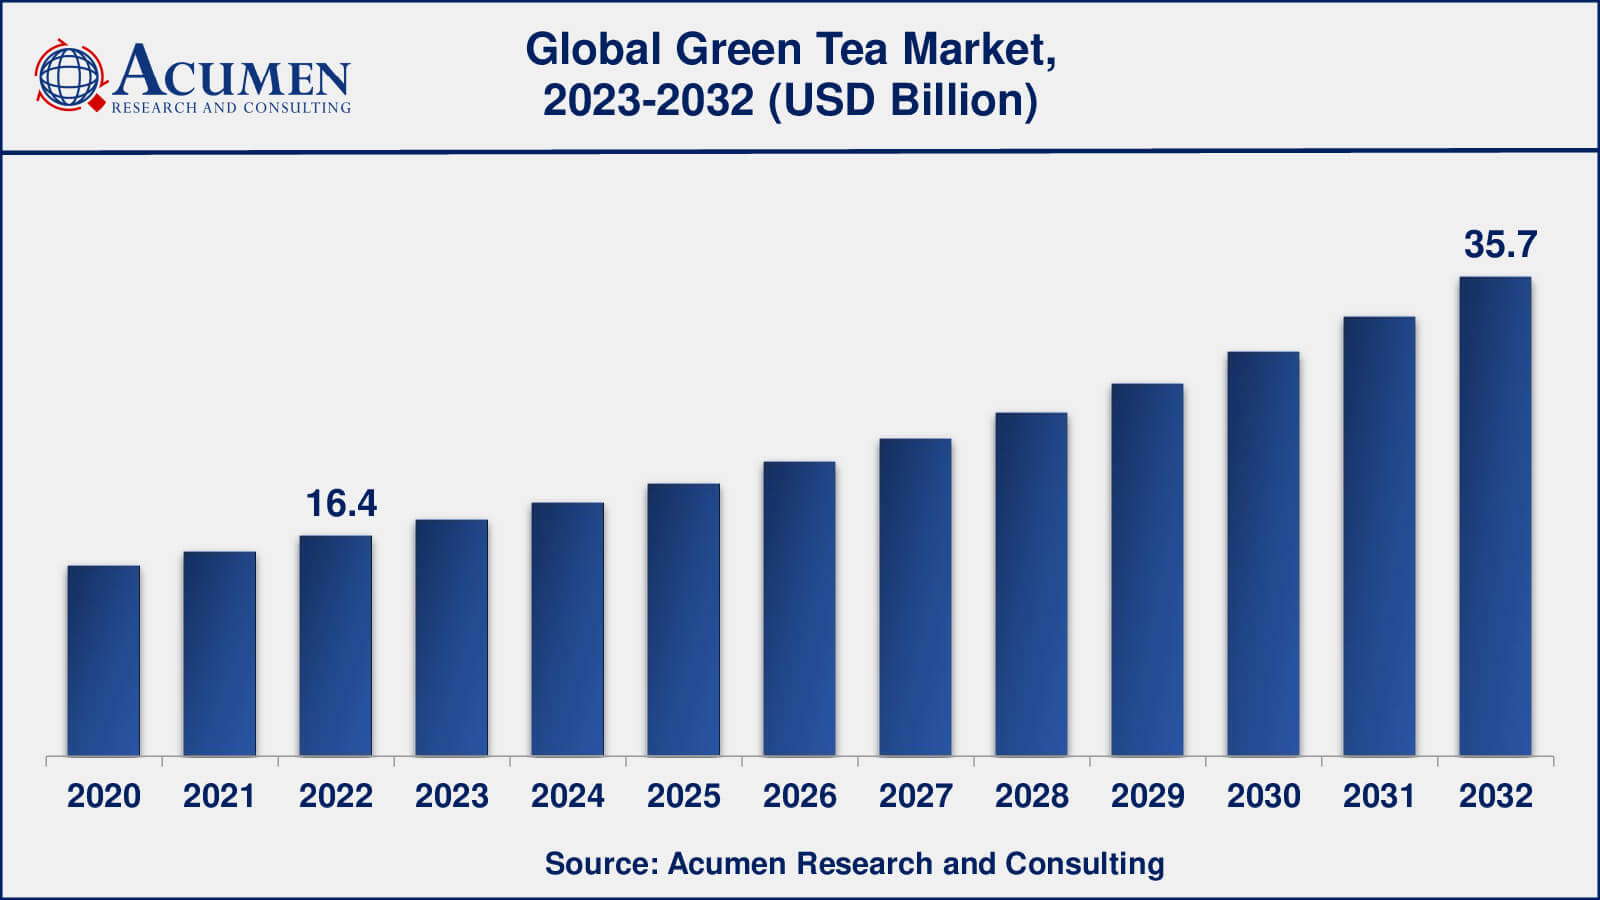 Global Green Tea Market Dynamics